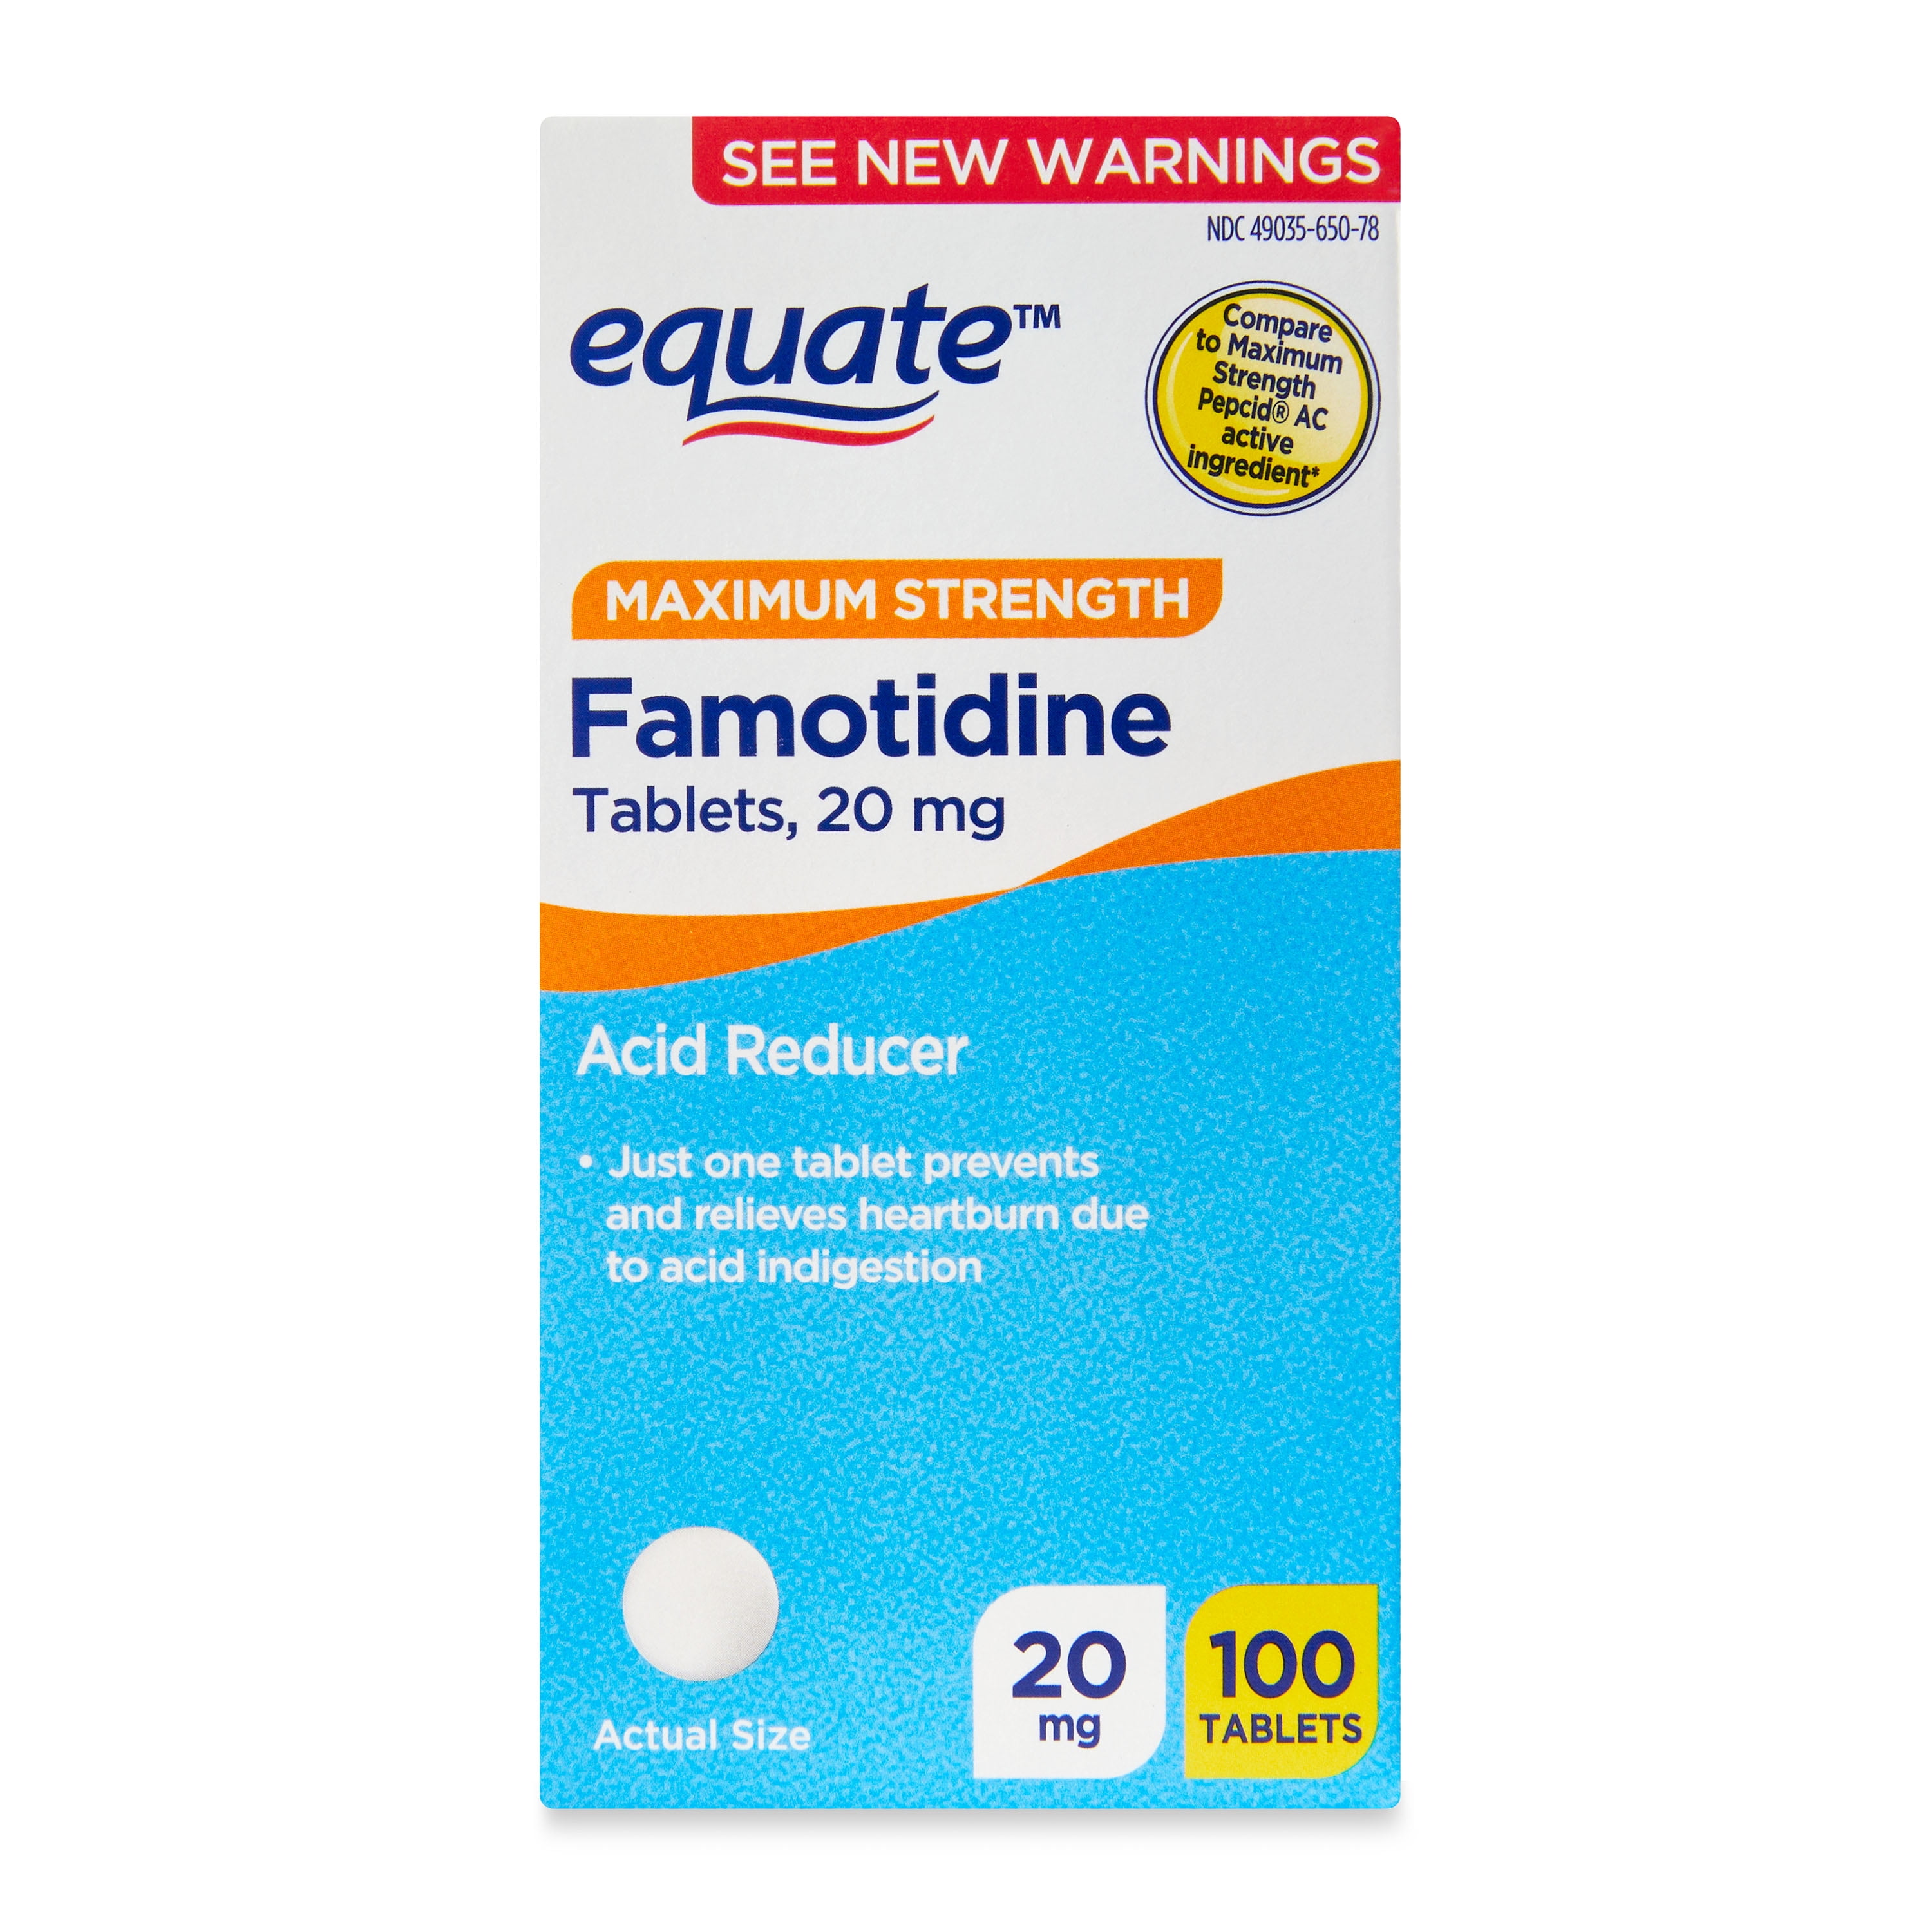 Equate Maximum Strength Famotidine Tablets, 20 mg, Acid Reducer, 100 Count